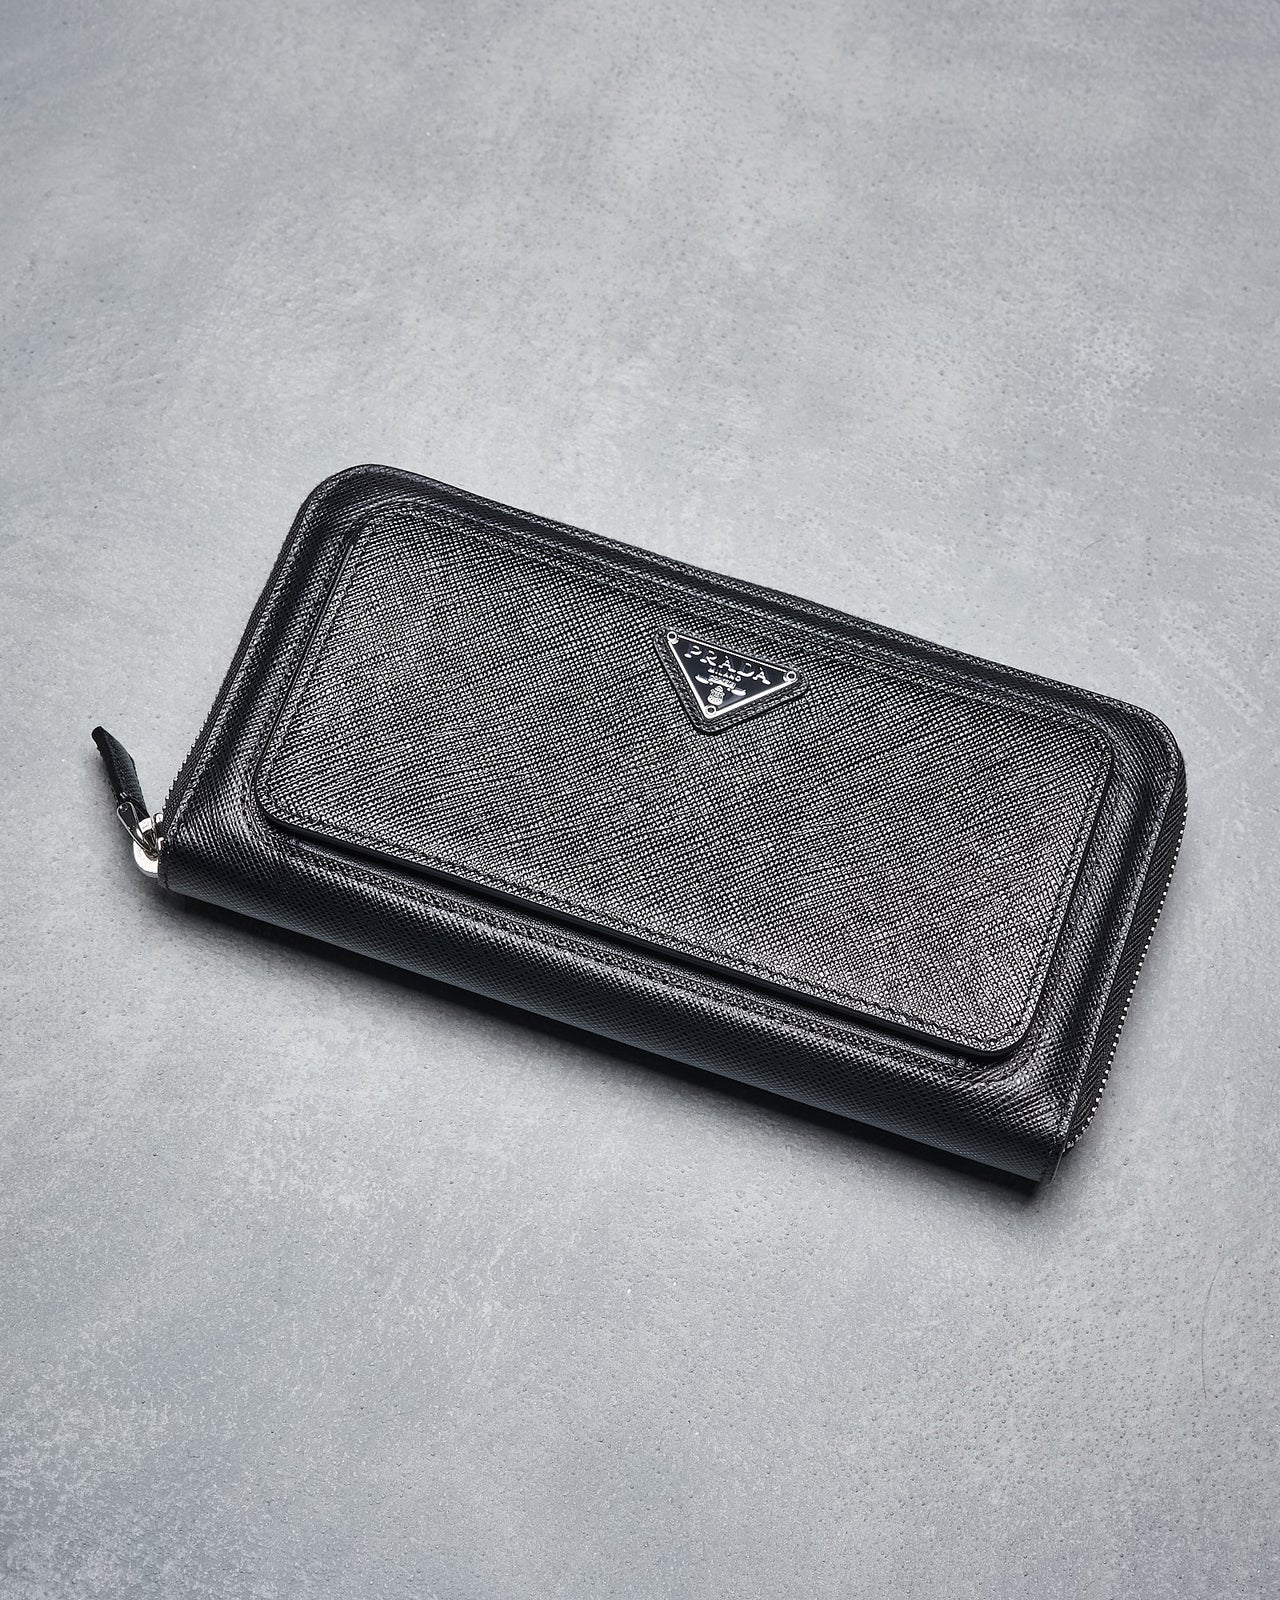 Prada Saffiano zip leather wallet